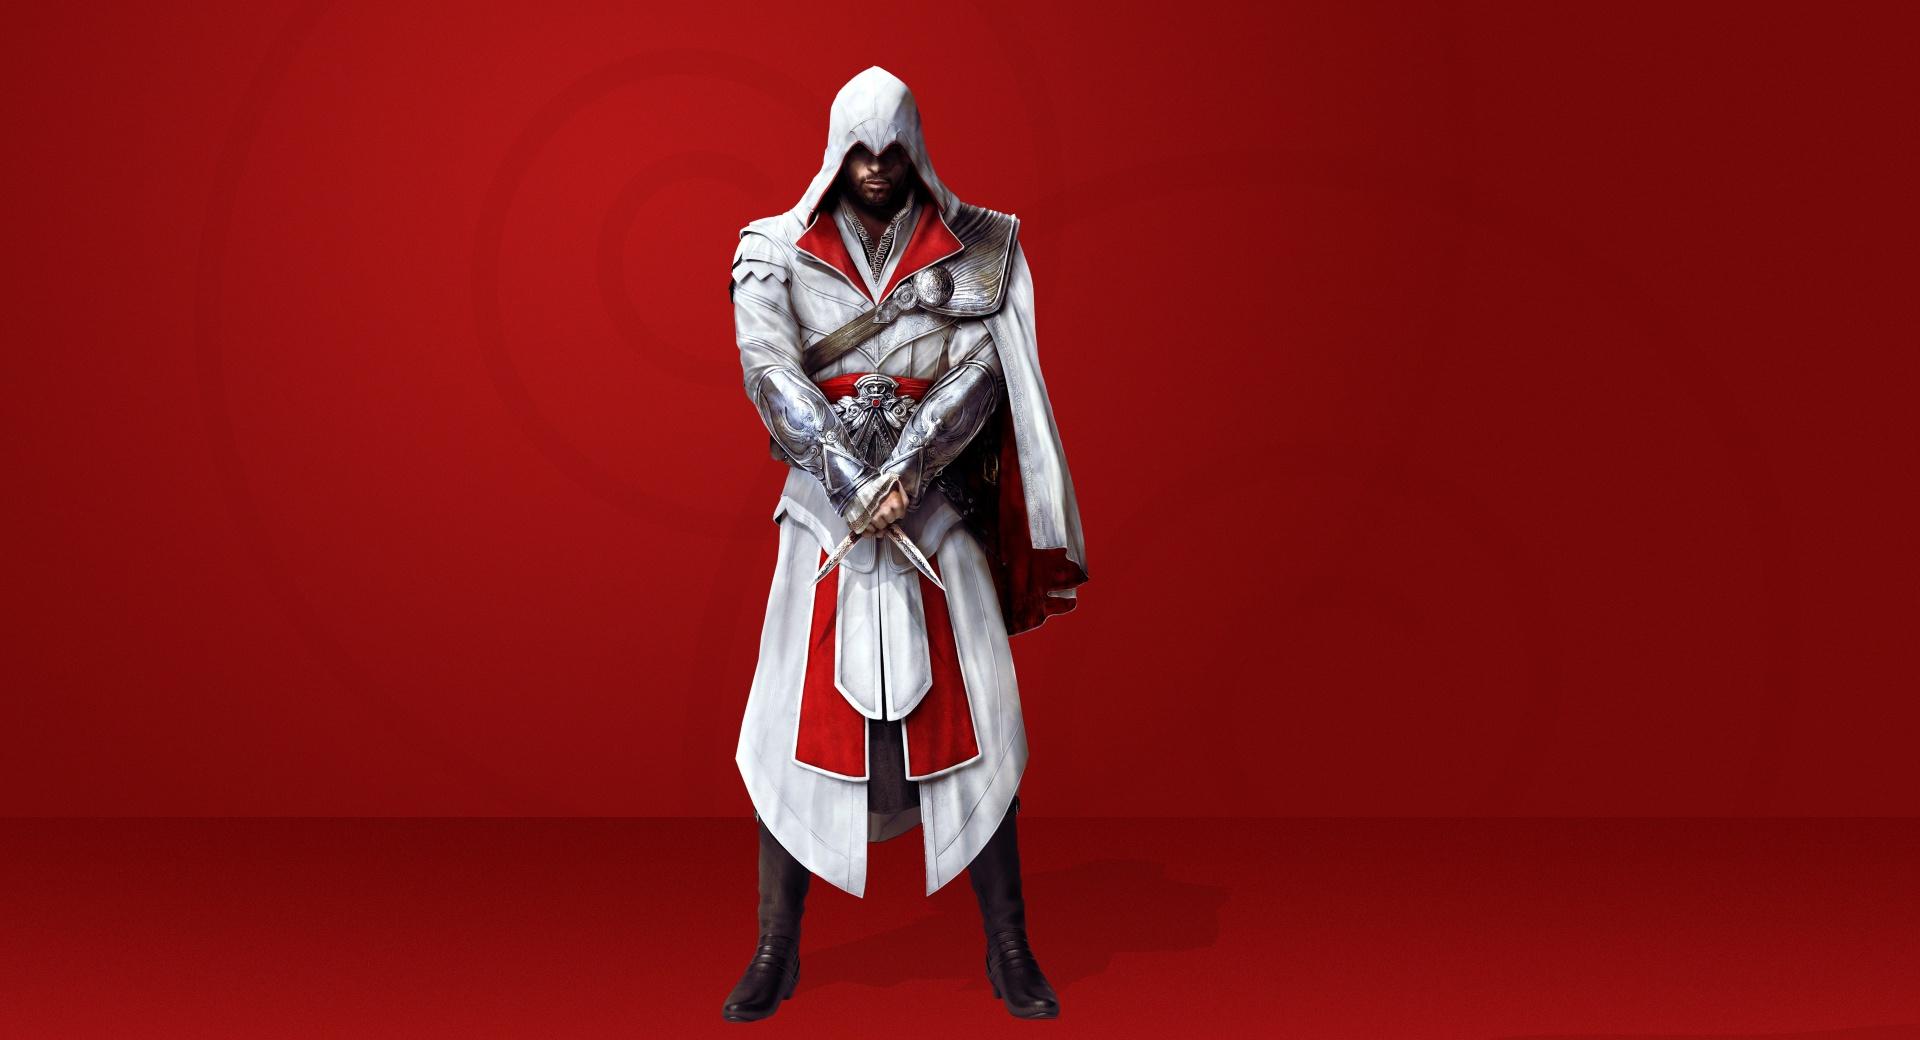 Assassins Creed Brotherhood at 1024 x 1024 iPad size wallpapers HD quality